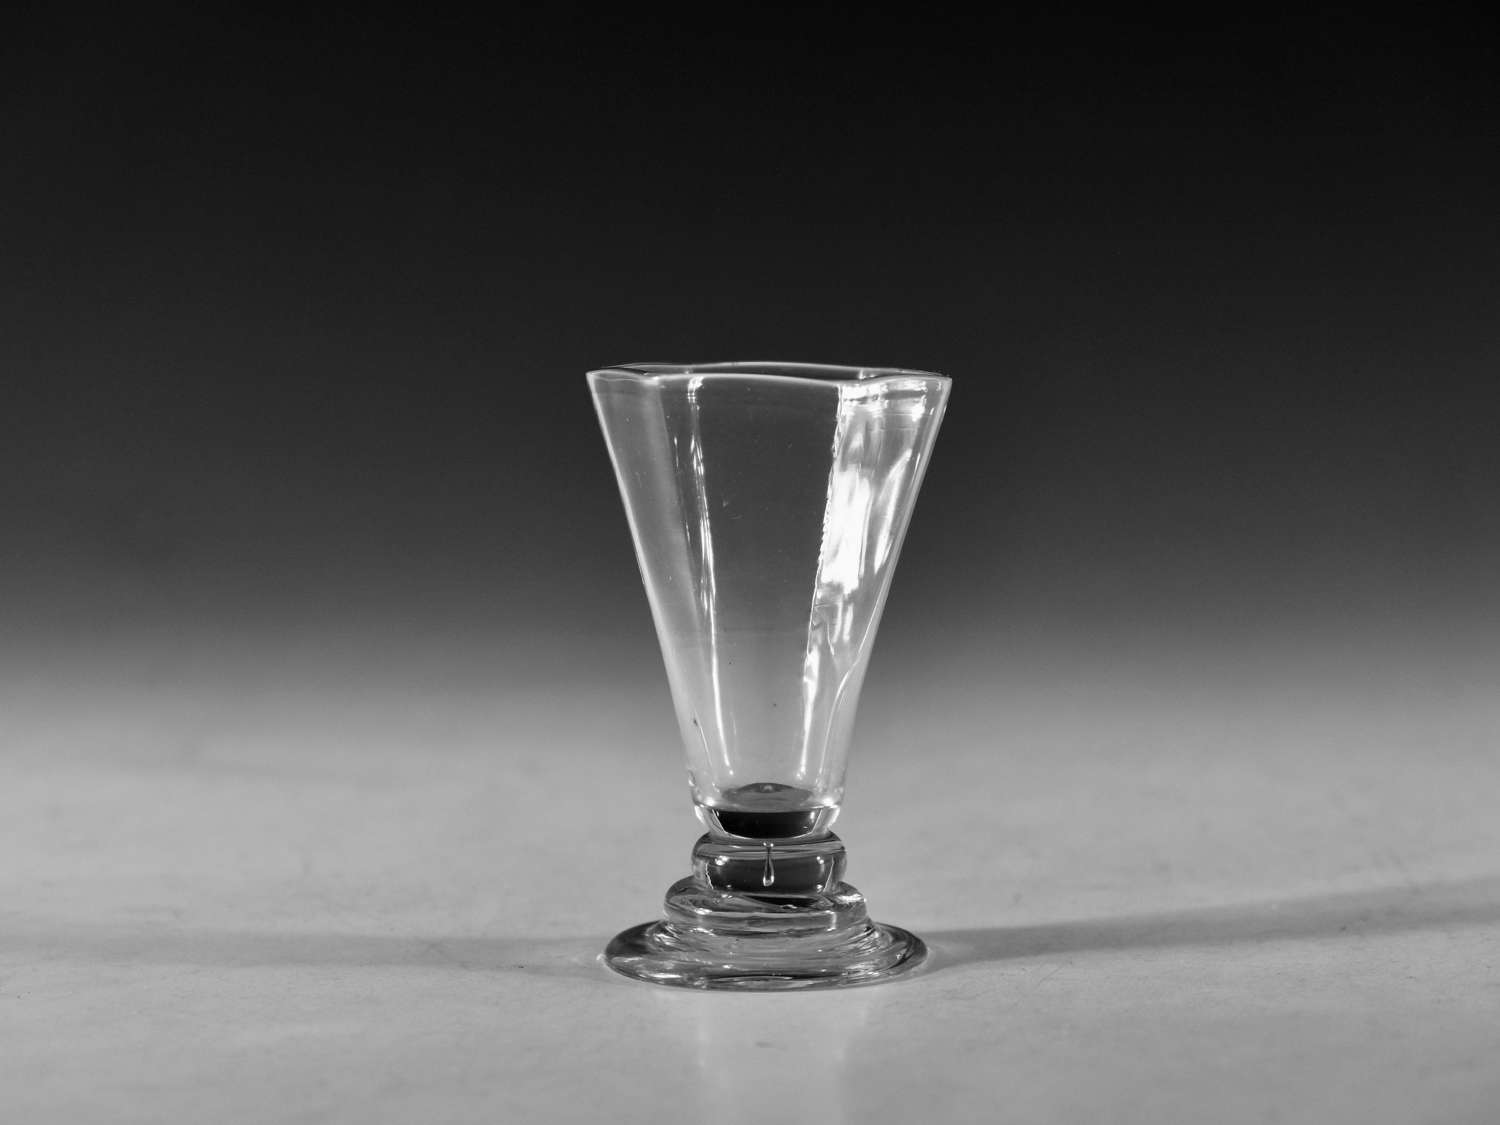 Antique glass - Hexagonal jelly glass English c1760/80